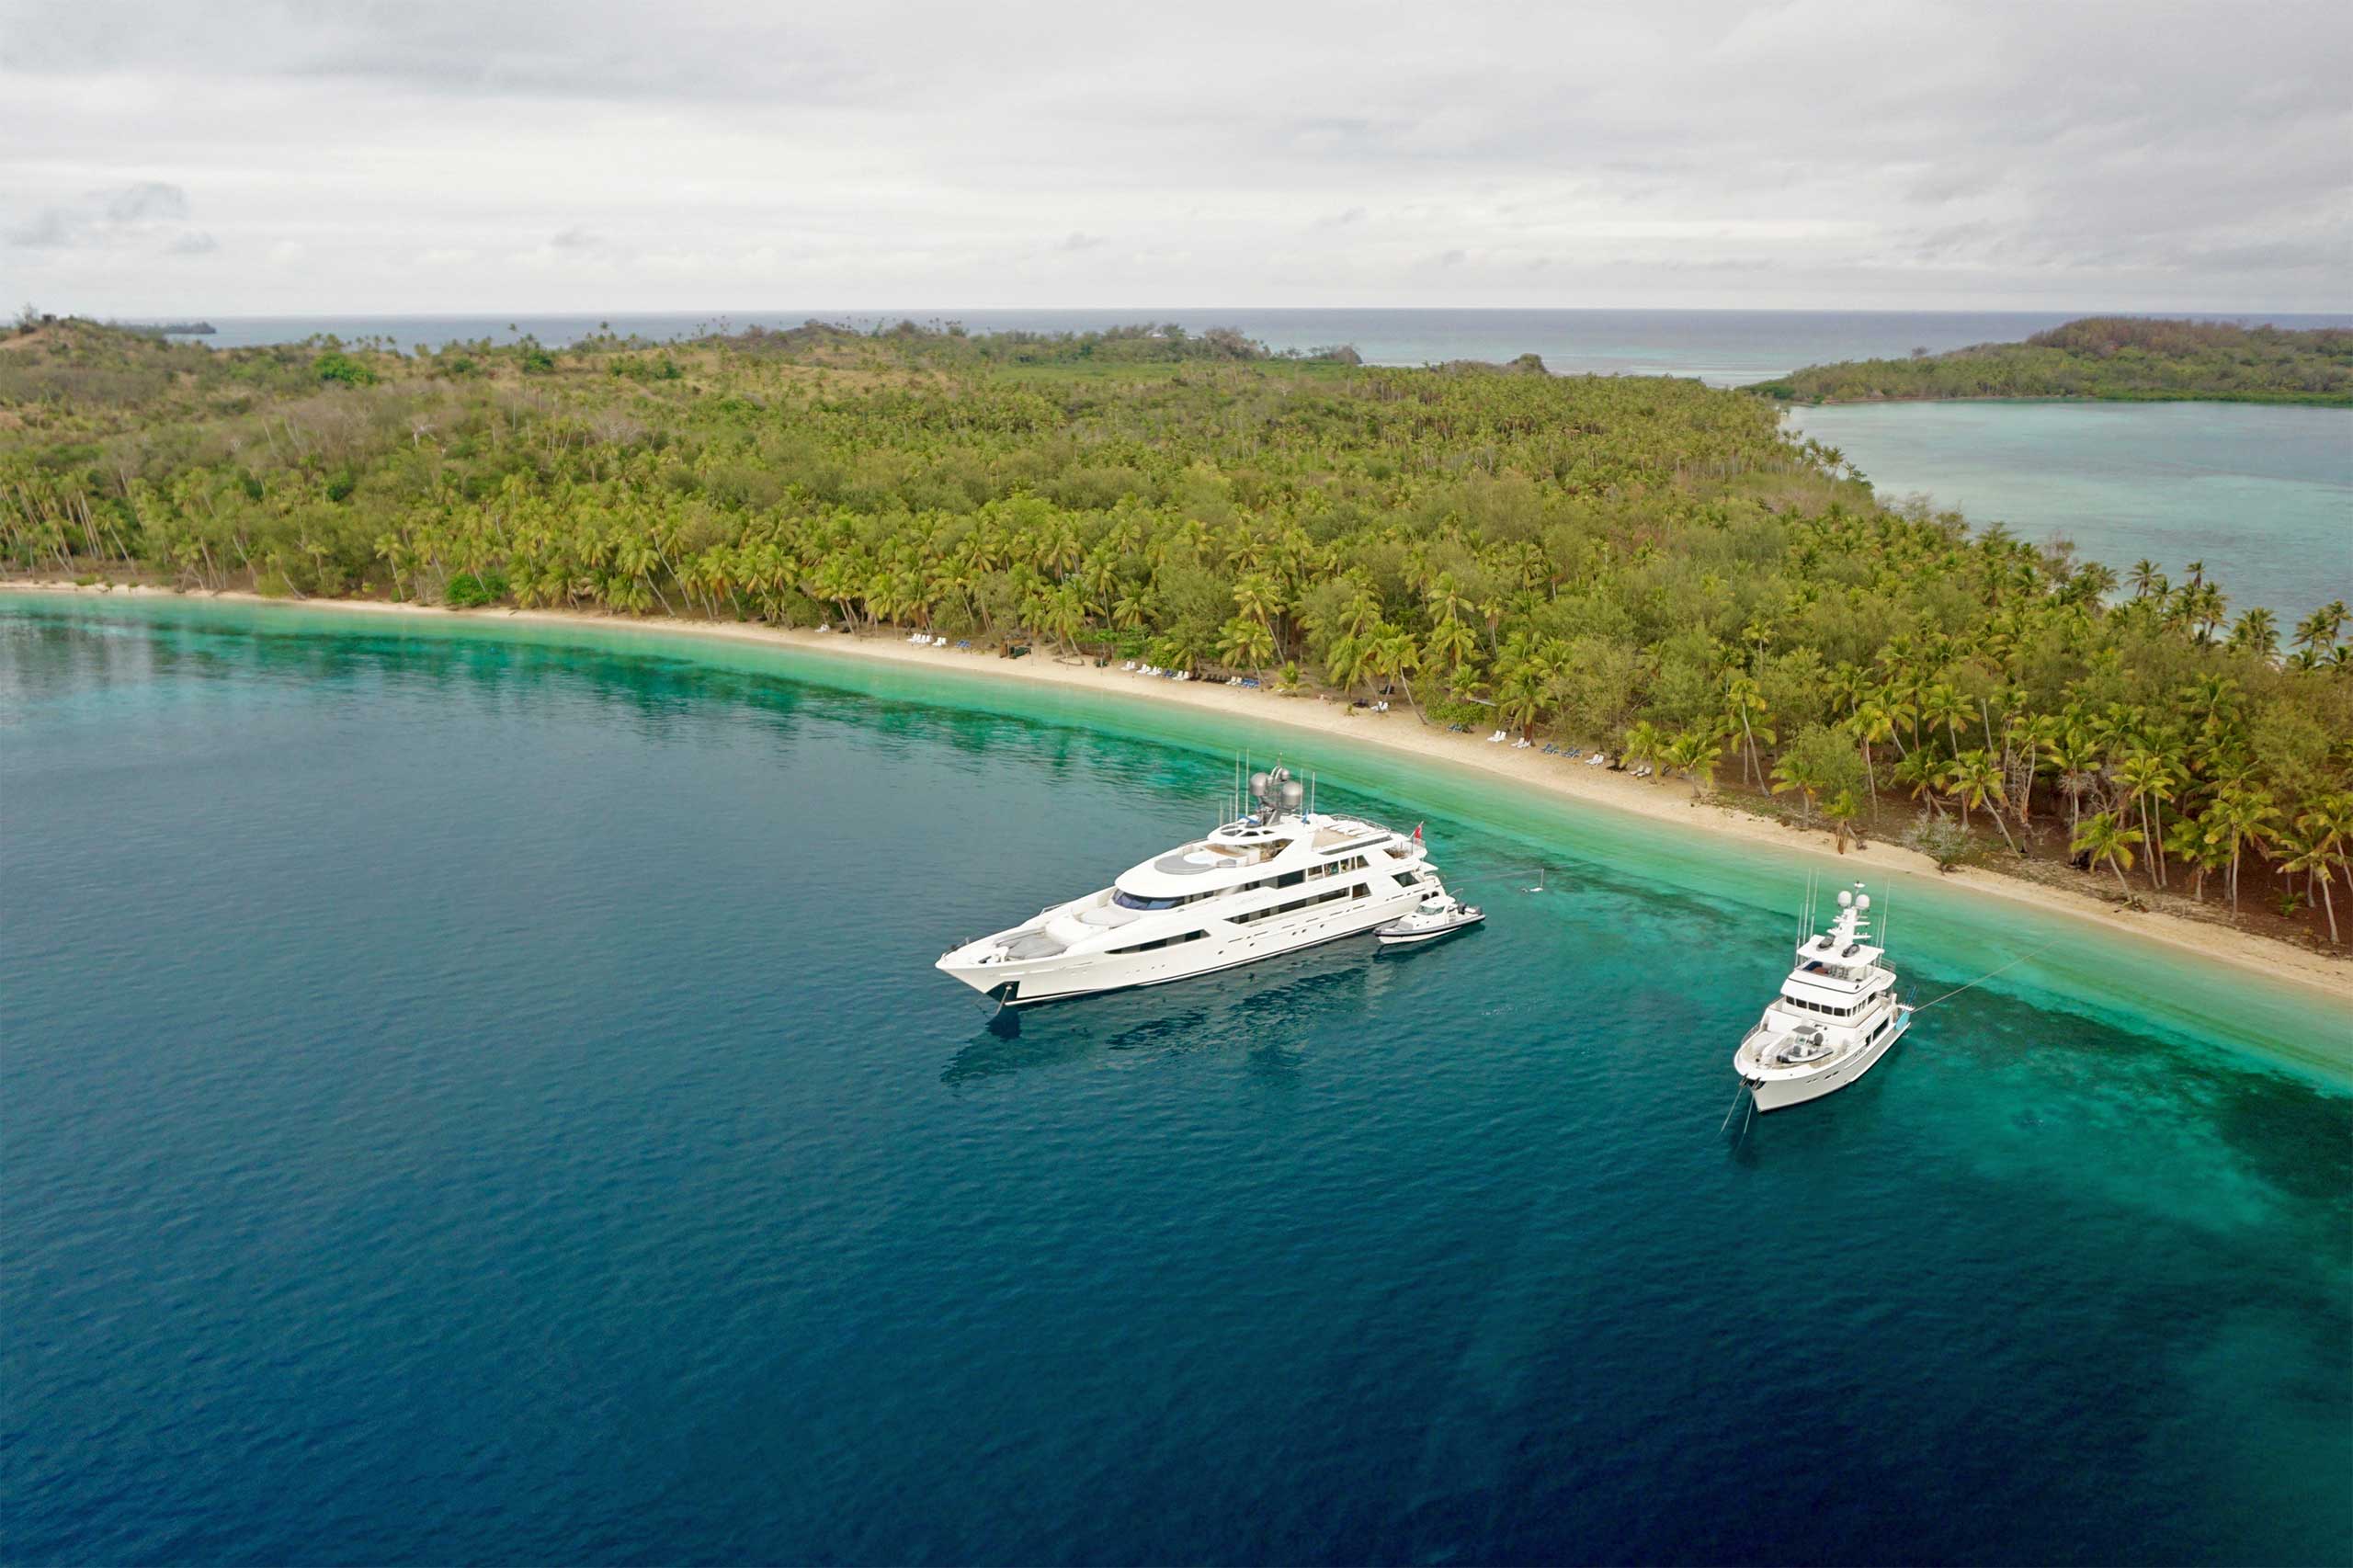 New Fiji yacht charter regulations